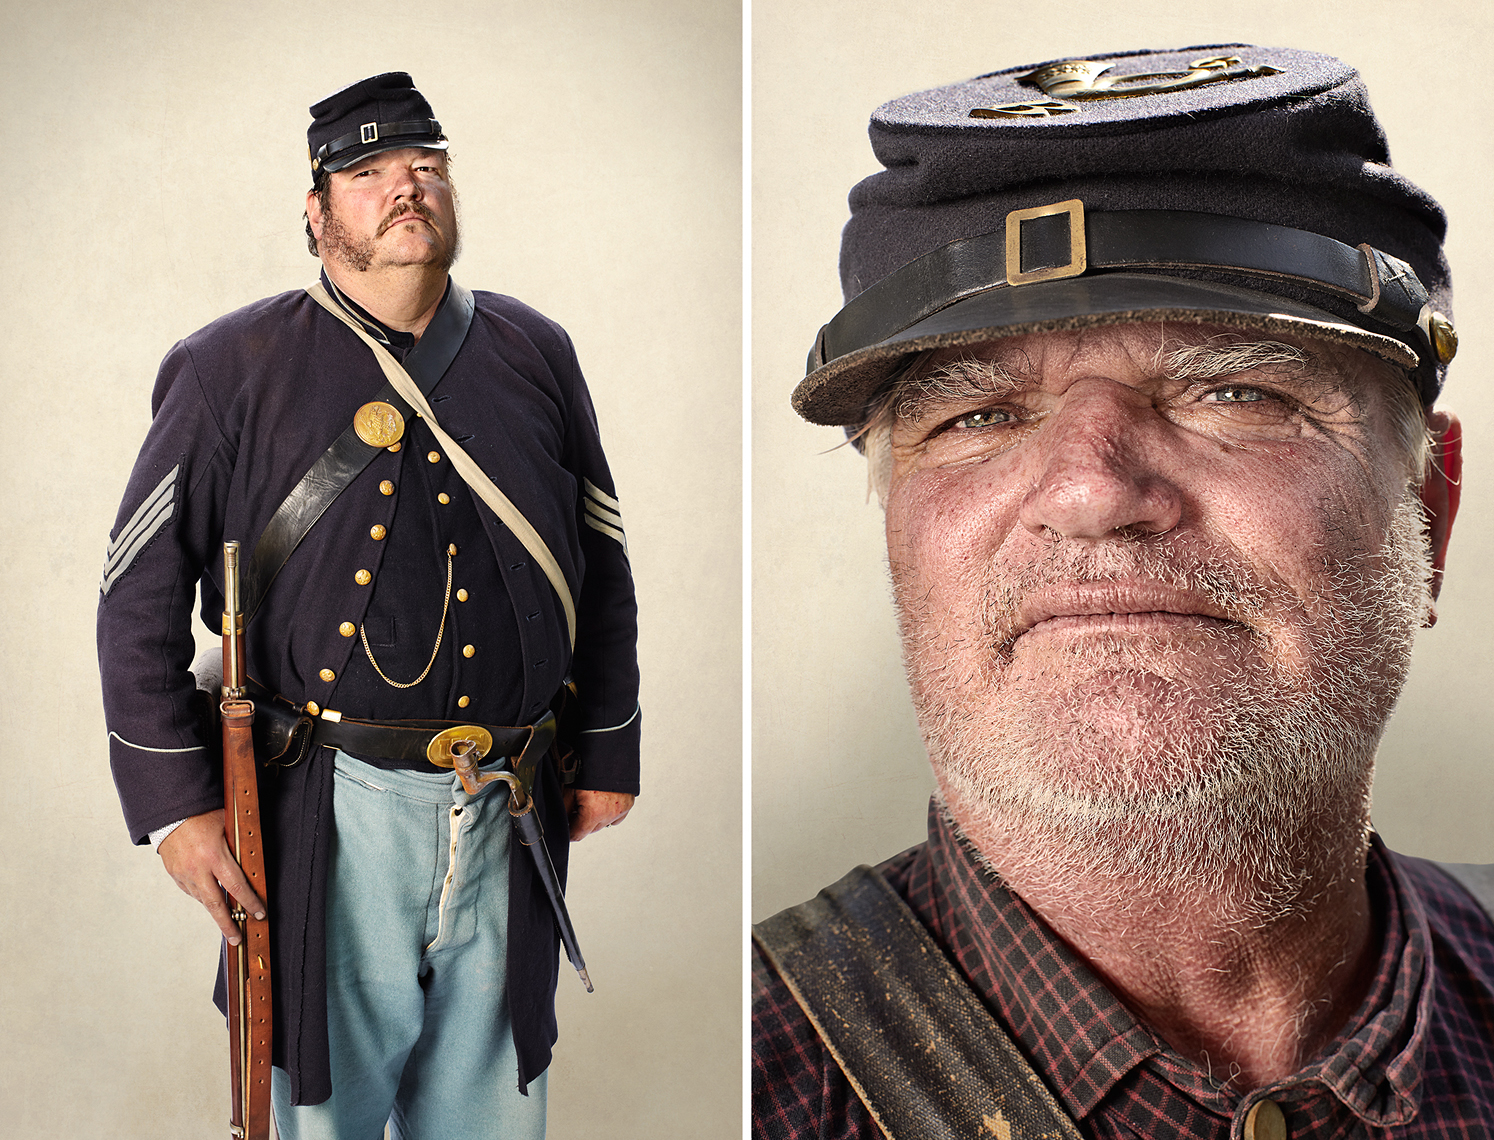 Reenactors Civil War Soldier